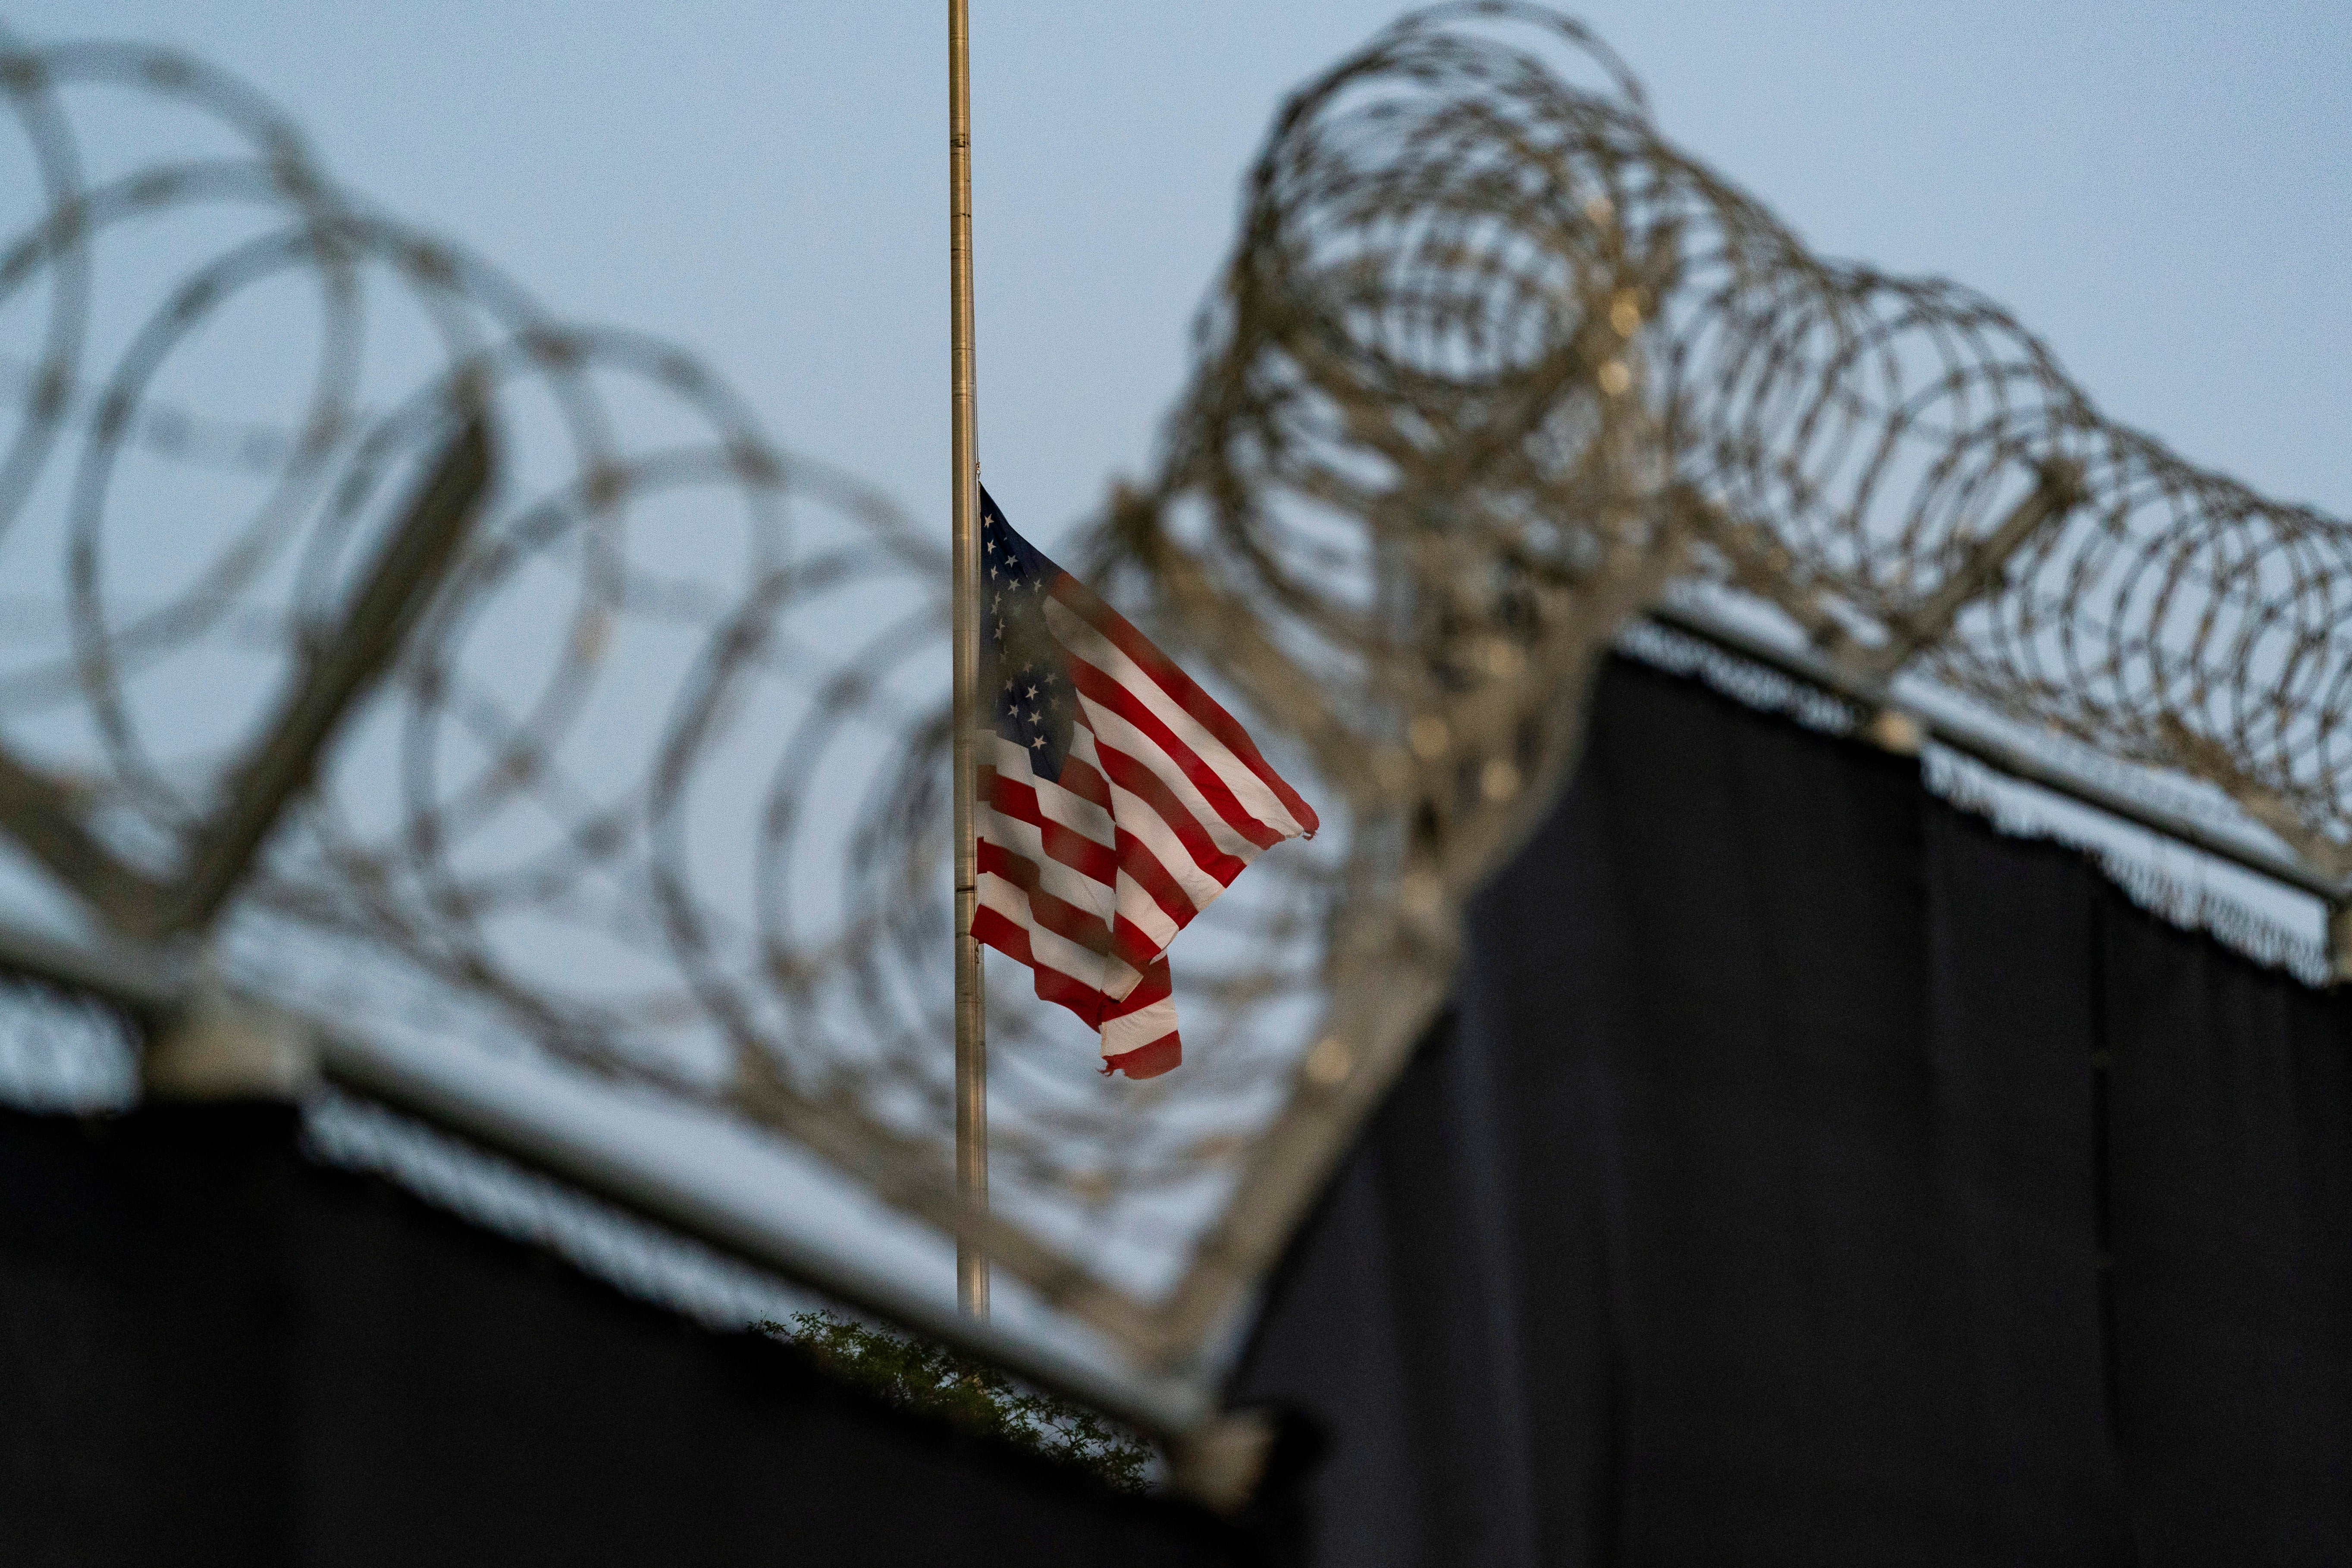 Camp Justice in Guantanamo Bay, Cuba